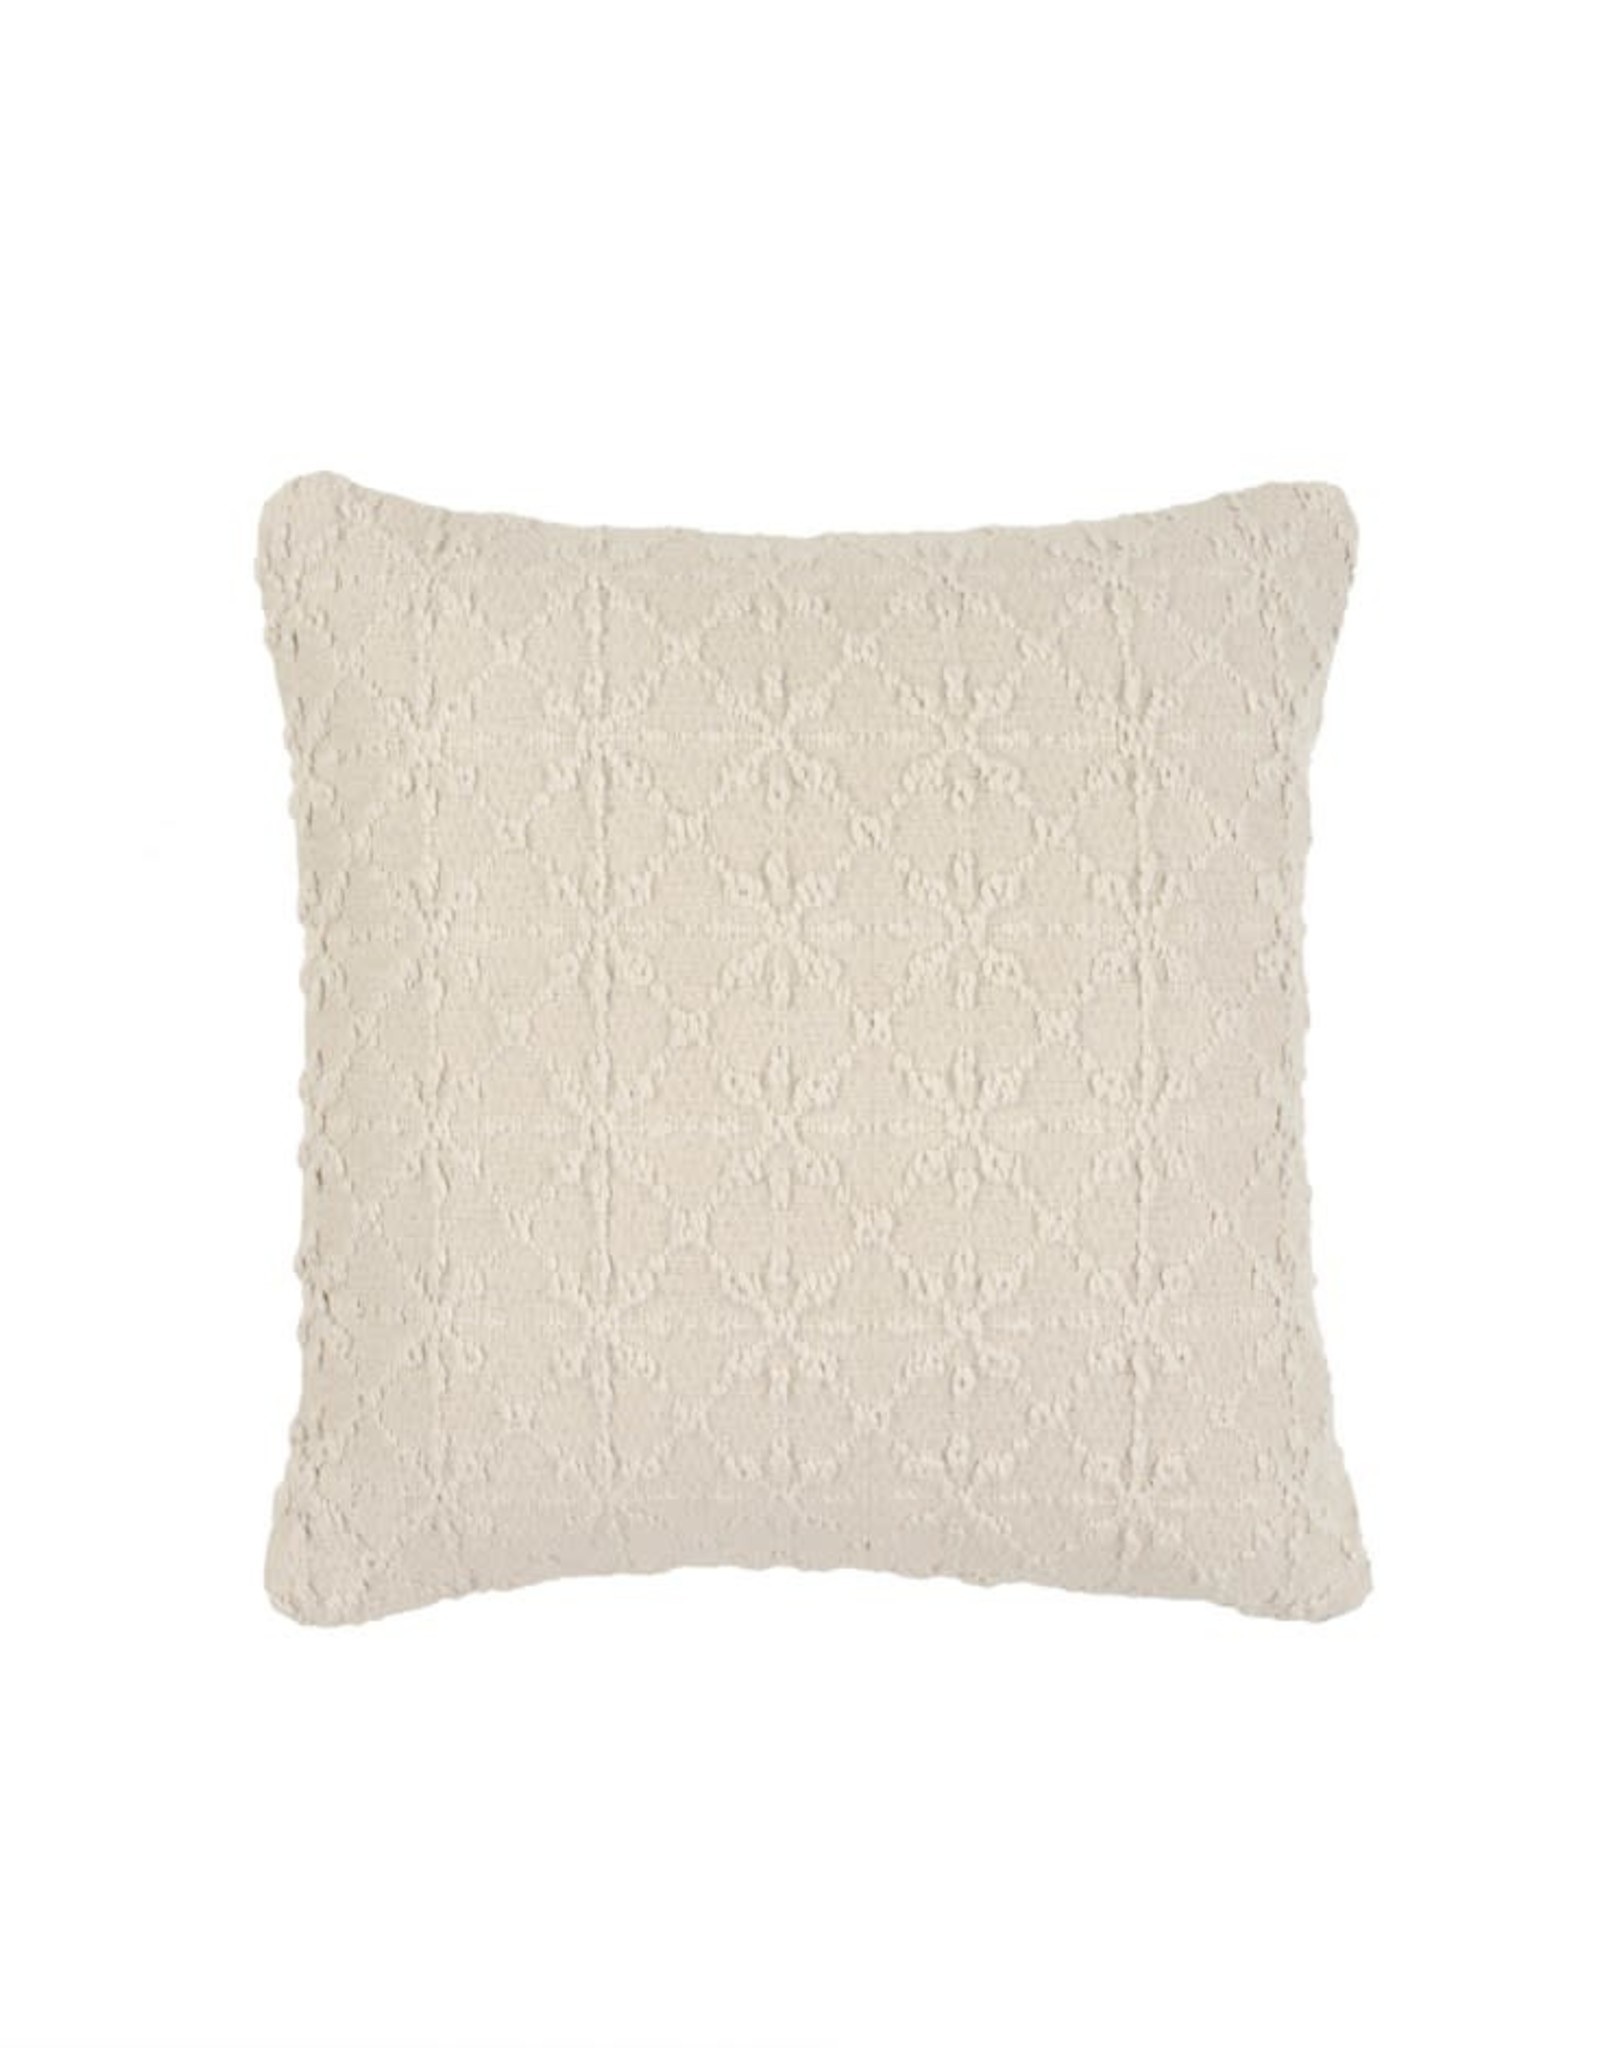 Amie Jacquard Pillow 18x18